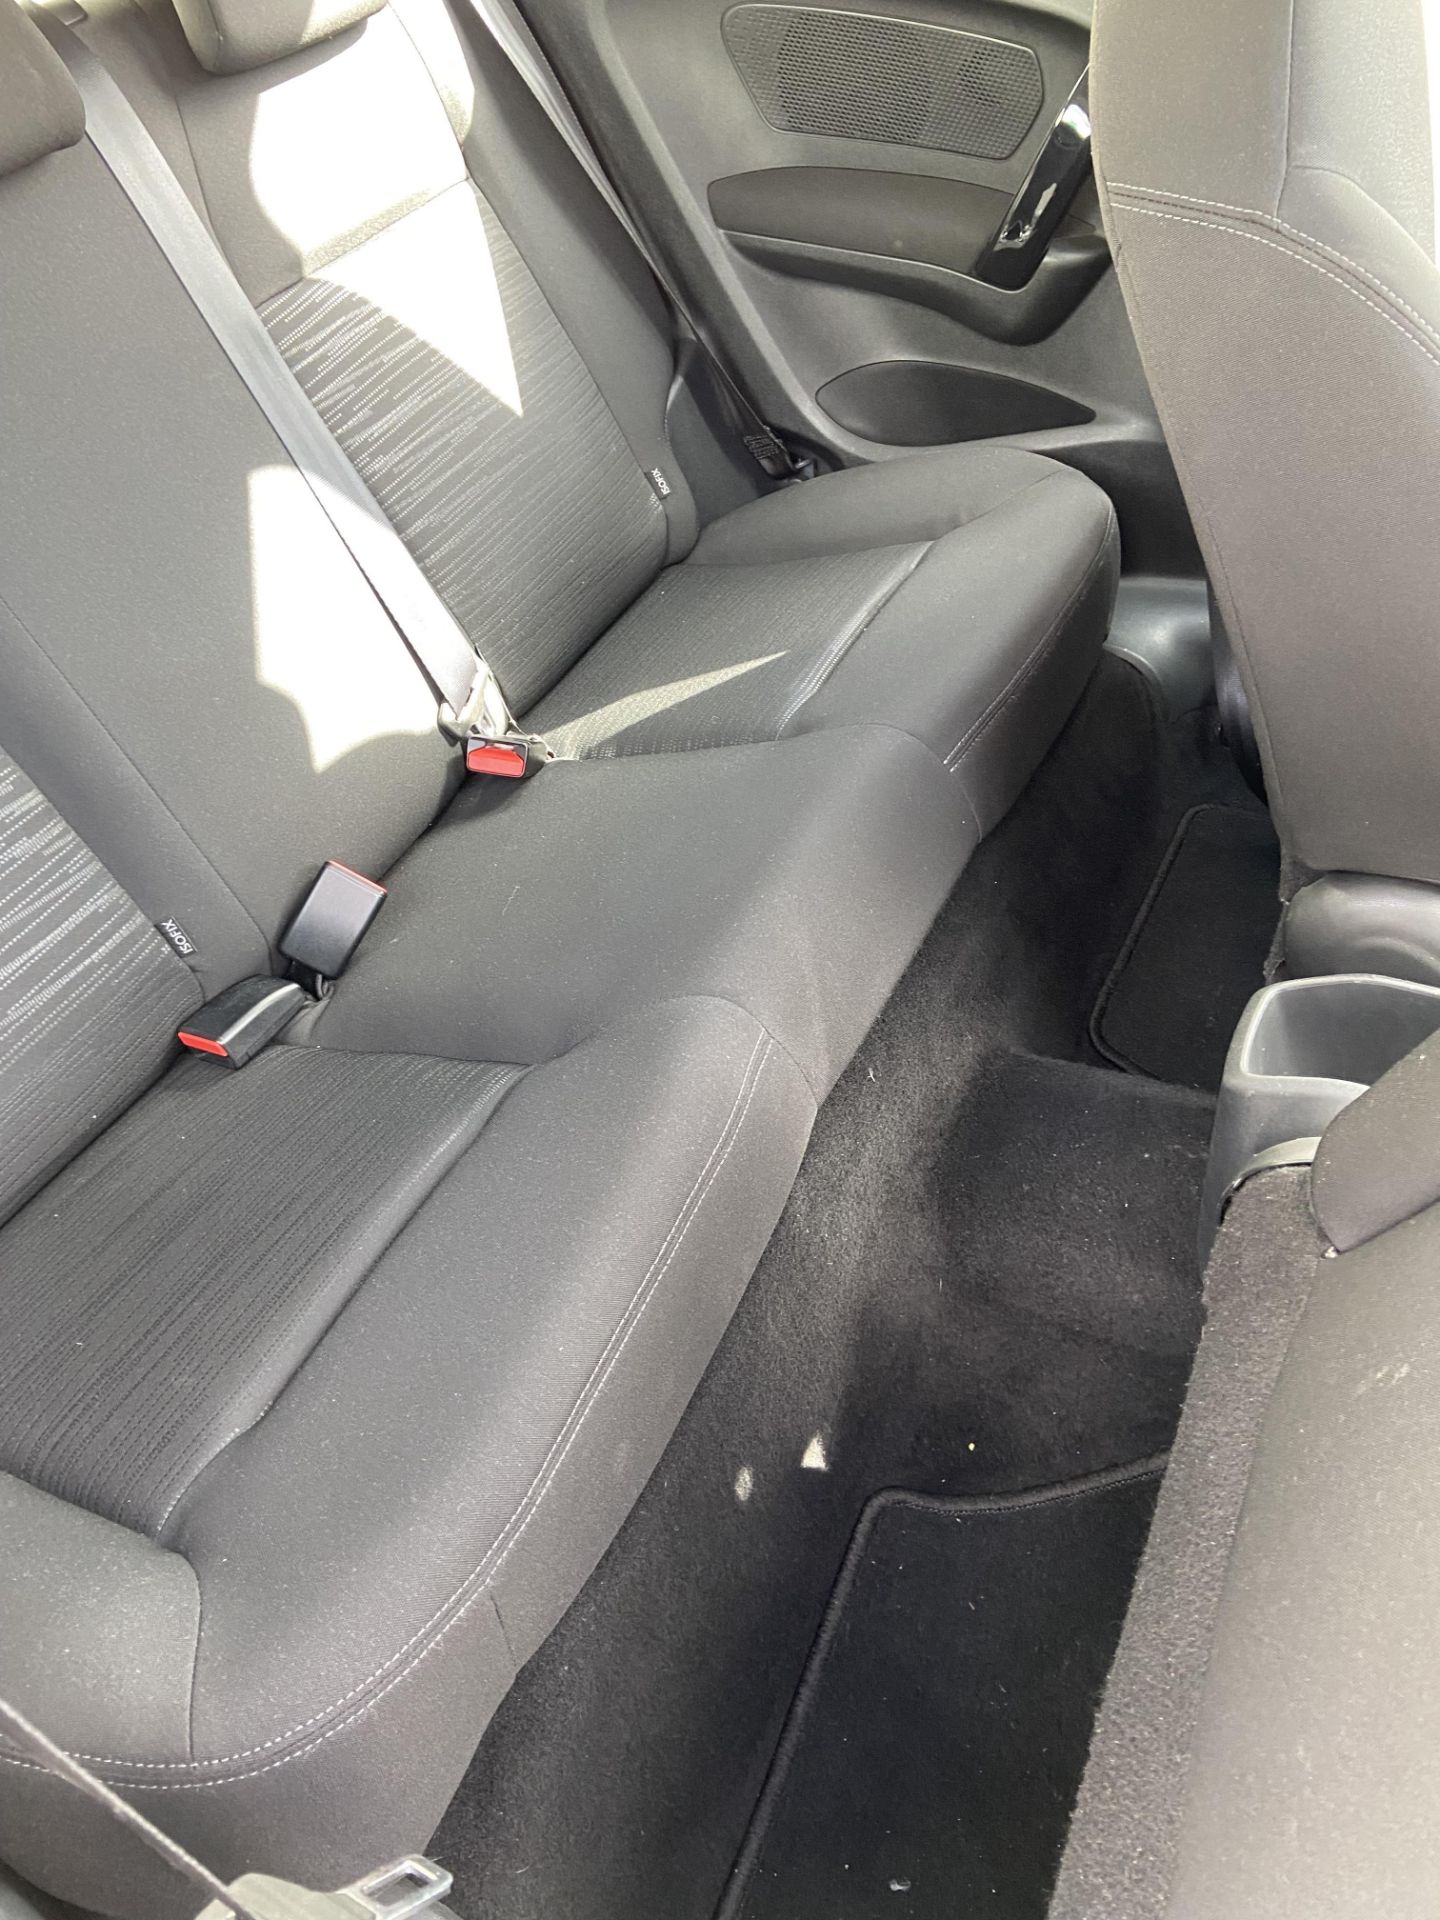 PEUGEOT 208 ACCESS PLUS 1.2 three door hatchback - petrol - black with black cloth interior. - Image 5 of 10